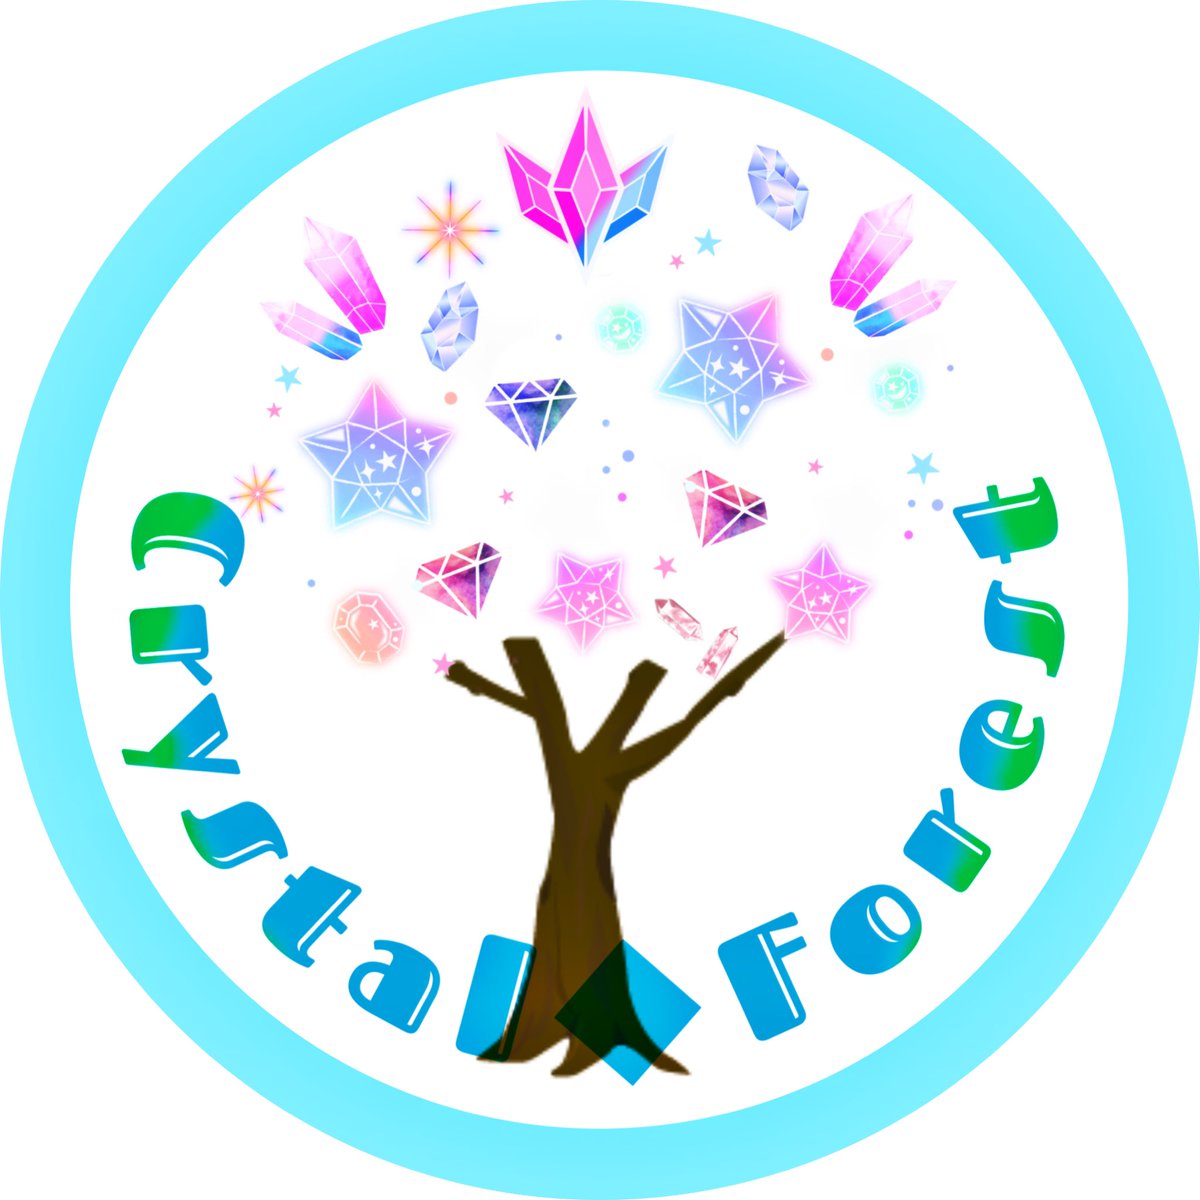 CrystalForestの皆さんお世話になりましたっ(❁ᴗ͈ˬᴗ͈)ﾍﾟｺﾘ
甘やかしてくれてありがとうございました(ㅅ´ ˘ `)
#クリフォレ自由帳